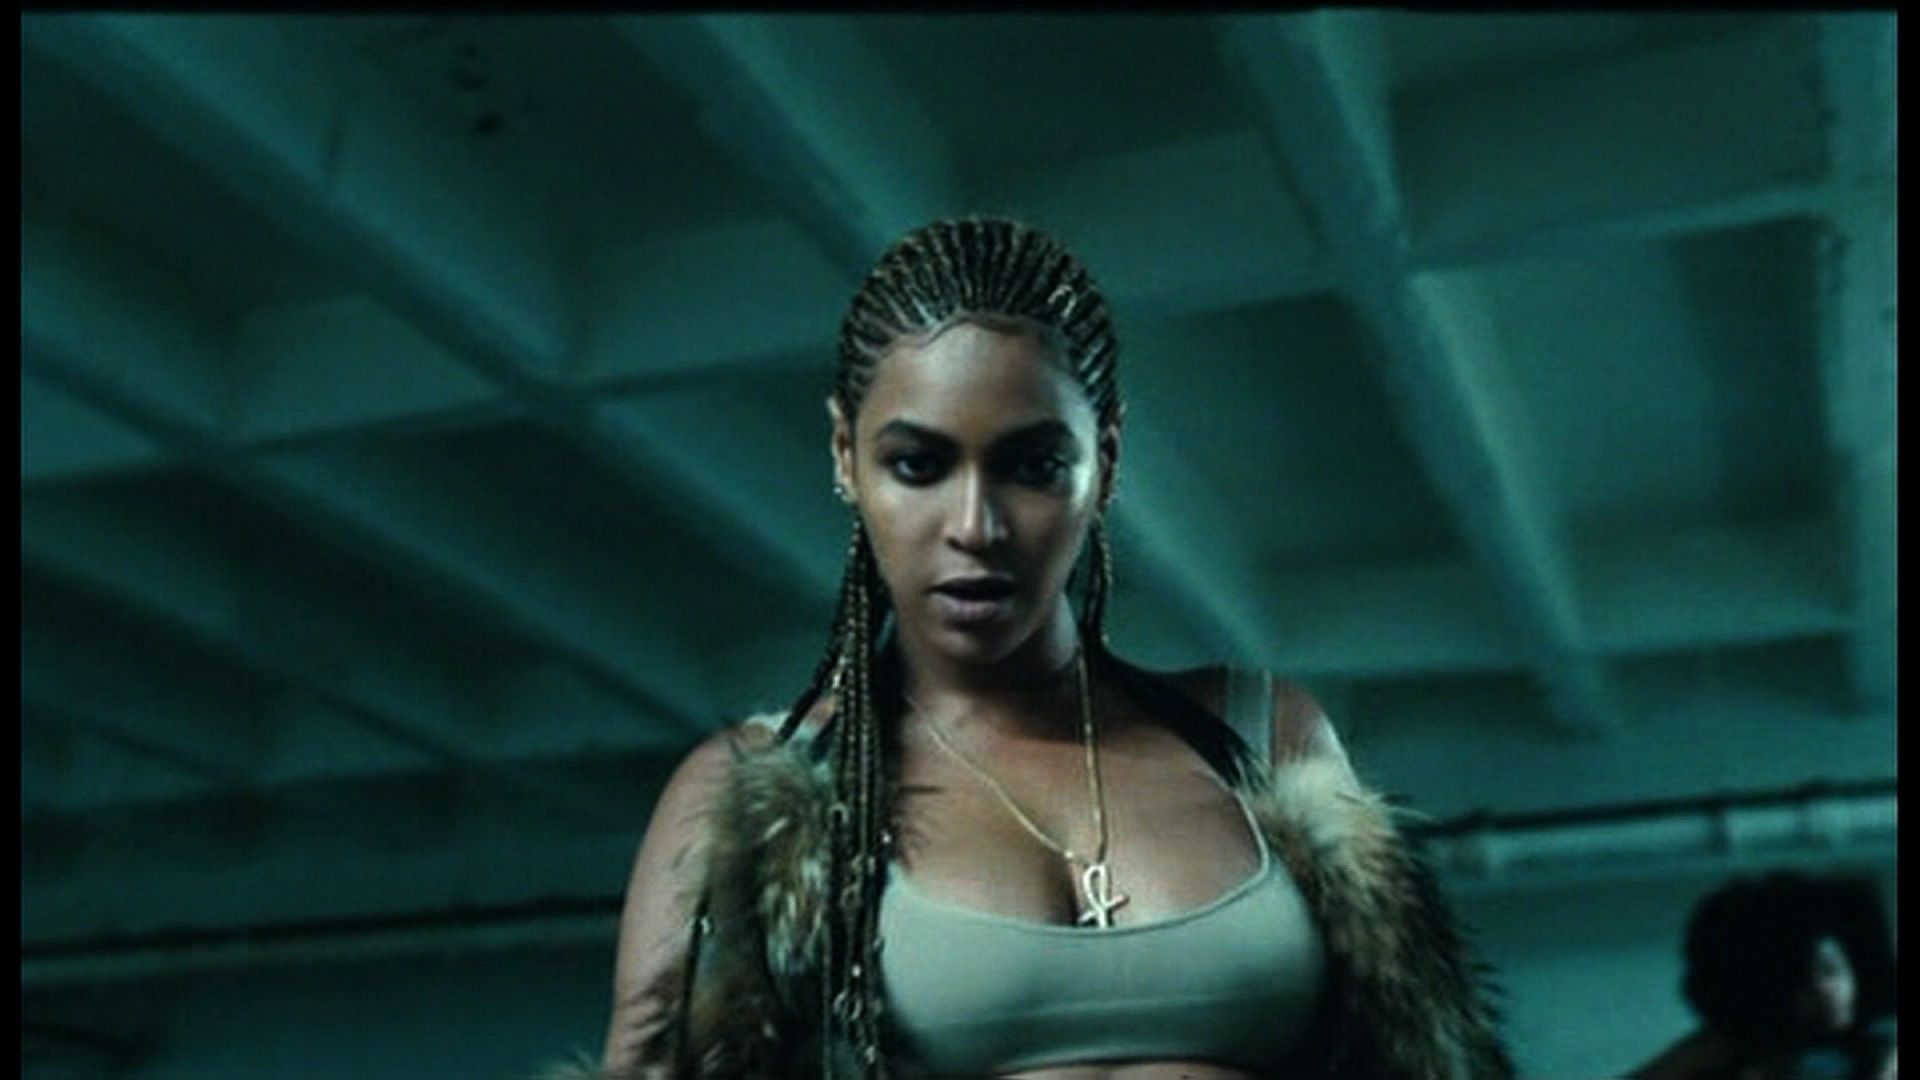 Most powerful 'Lemonade' words not Beyonce's